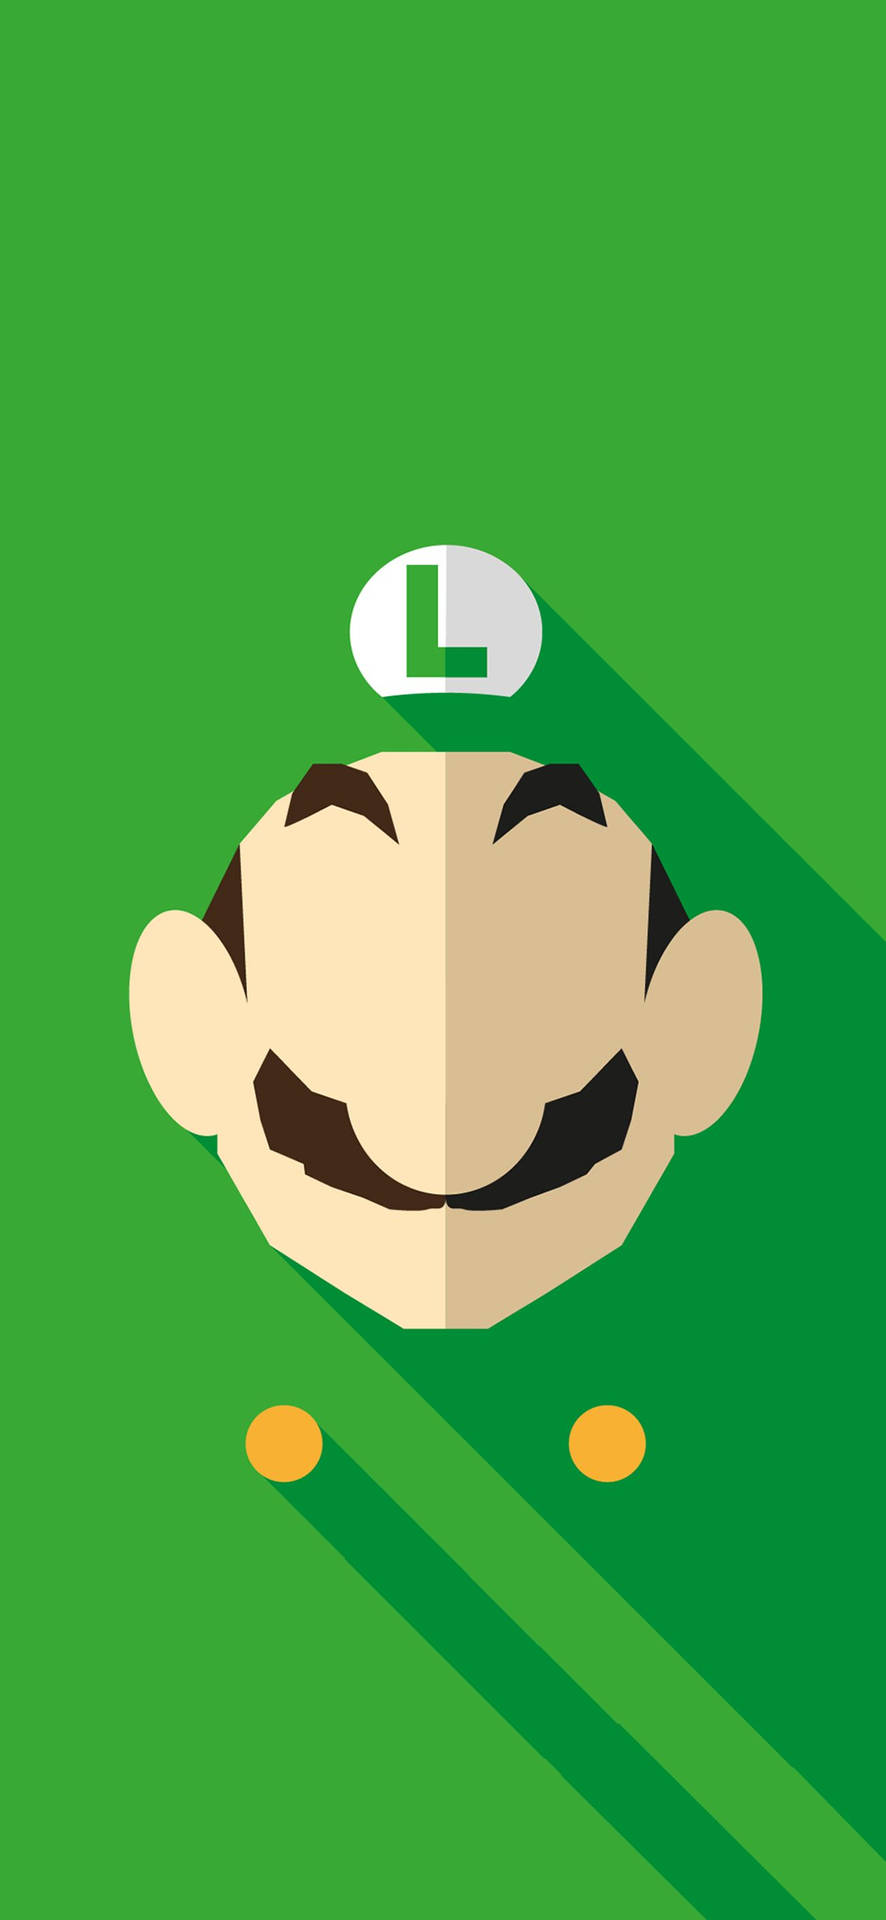 Luigi's Face Wallpaper